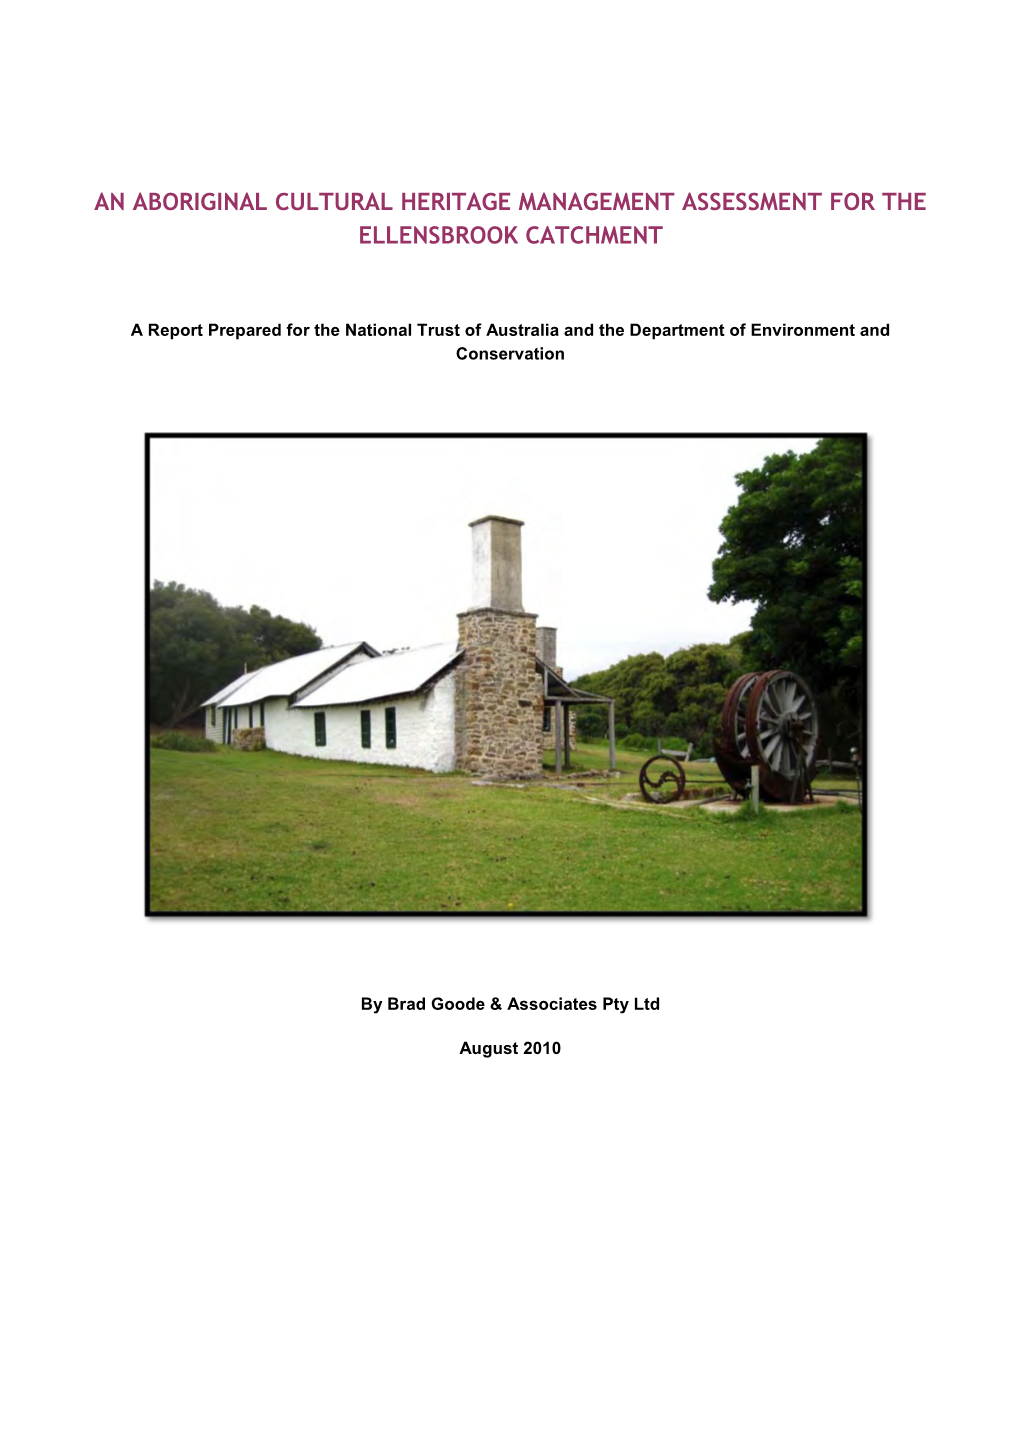 An Aboriginal Cultural Heritage Management Assessment for the Ellensbrook Catchment